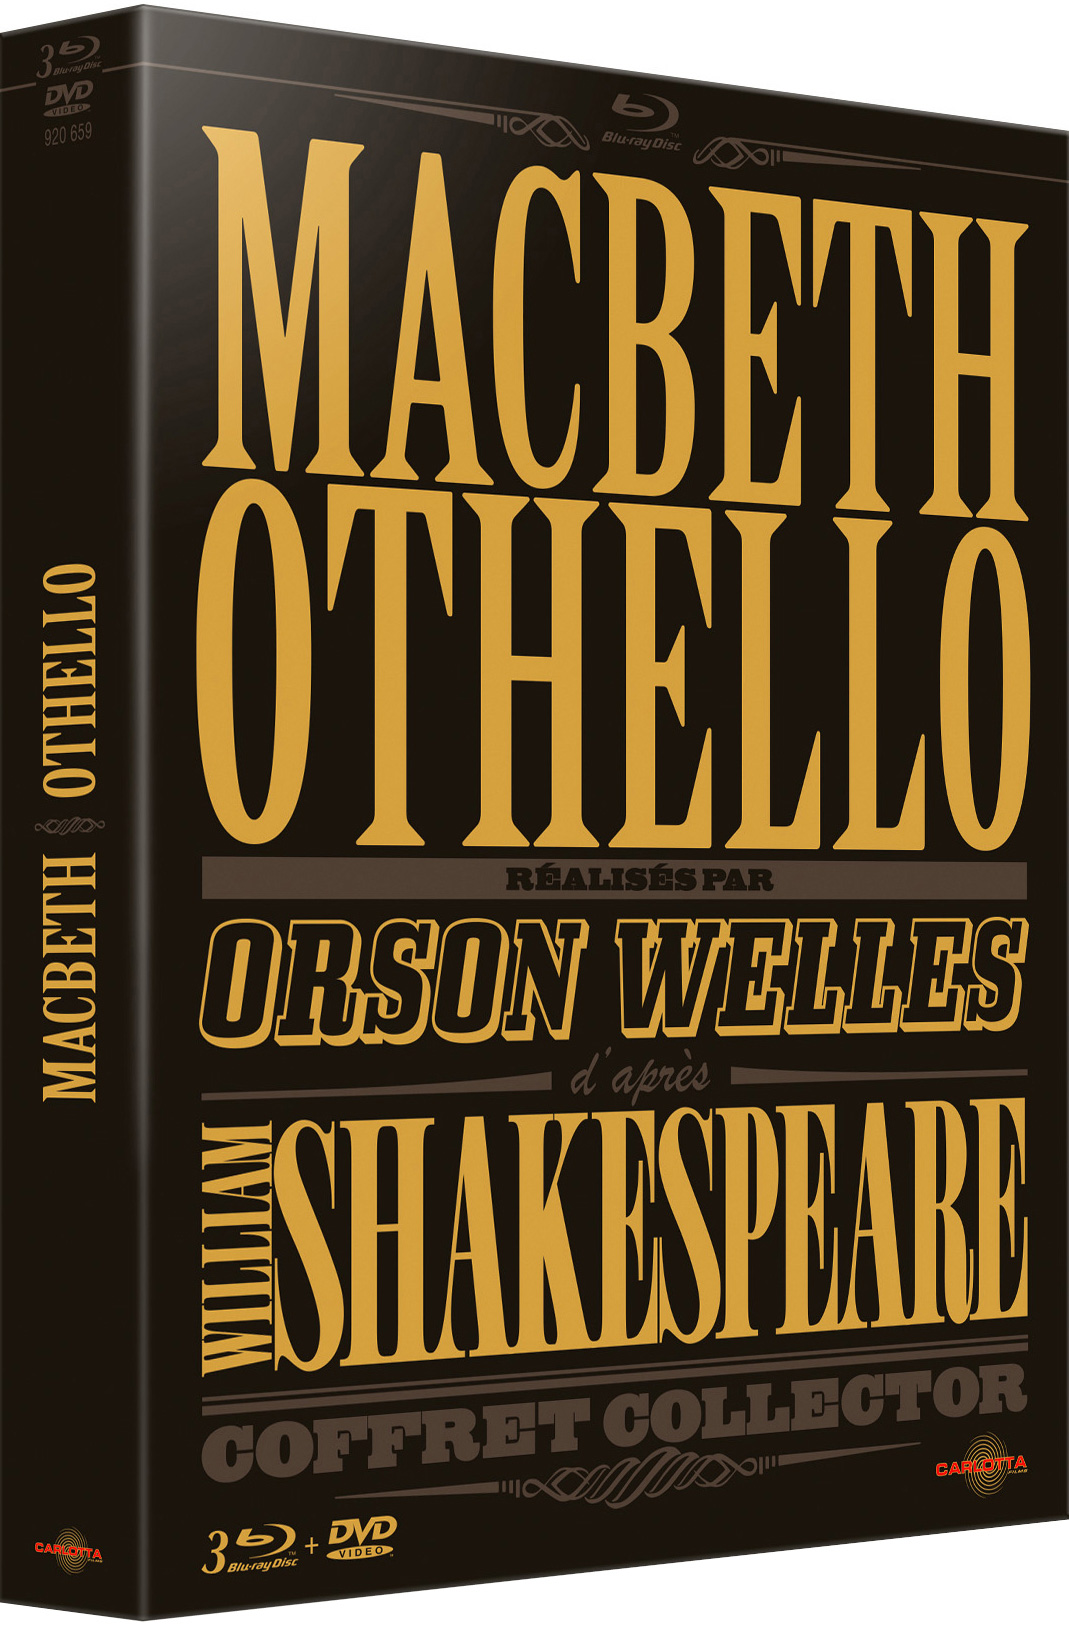 Coffret Macbeth Othello Welles